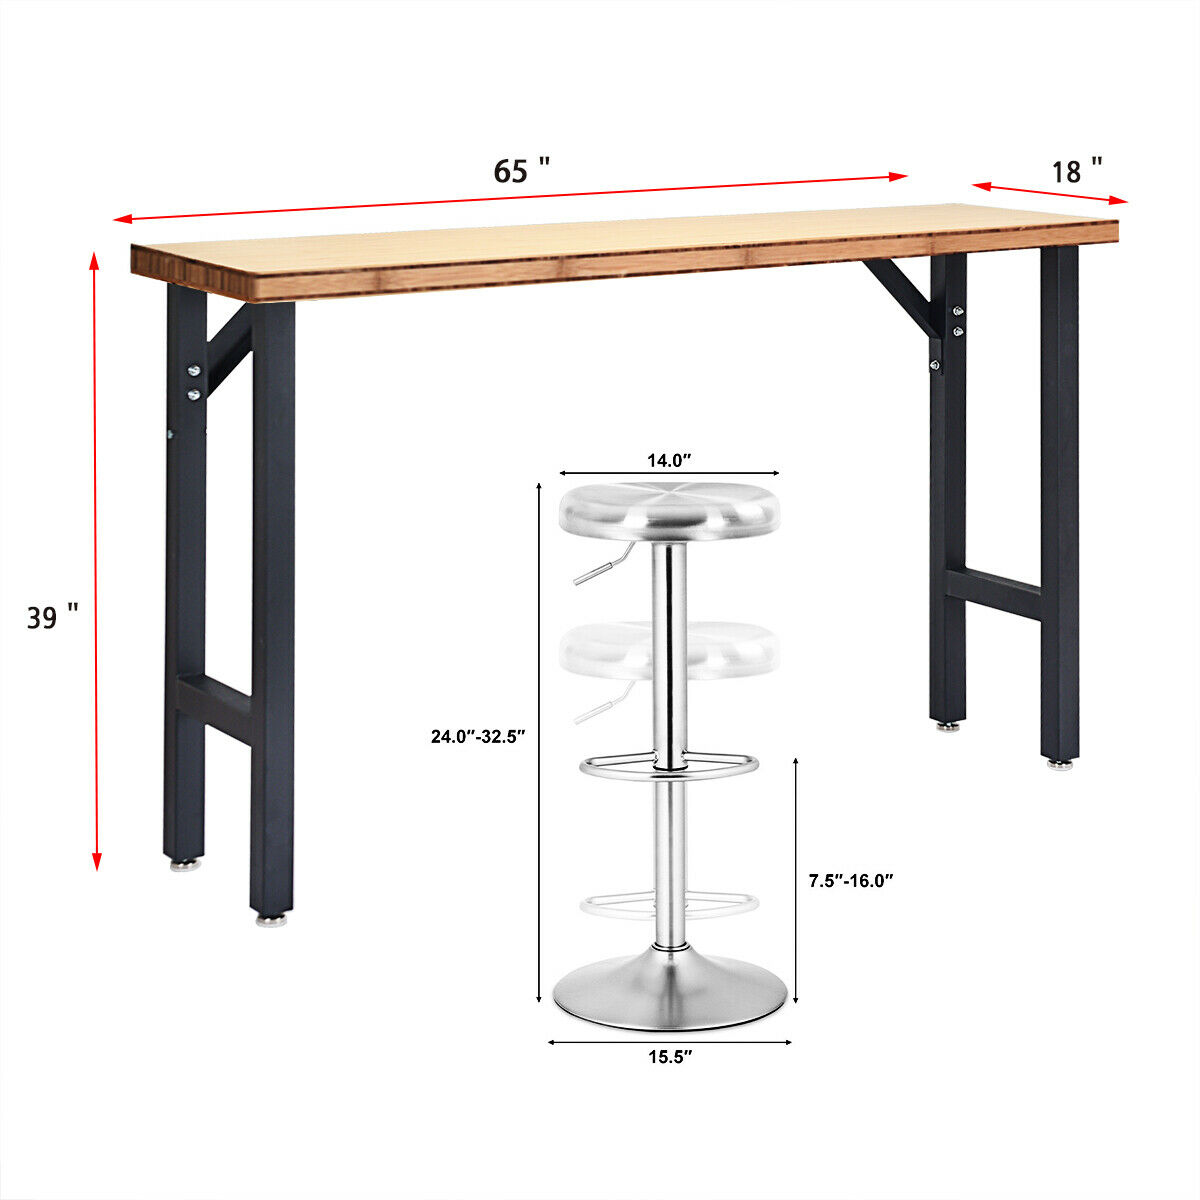 Gymax 65 Workbench Table Garage, Garage Bar Table And Stools